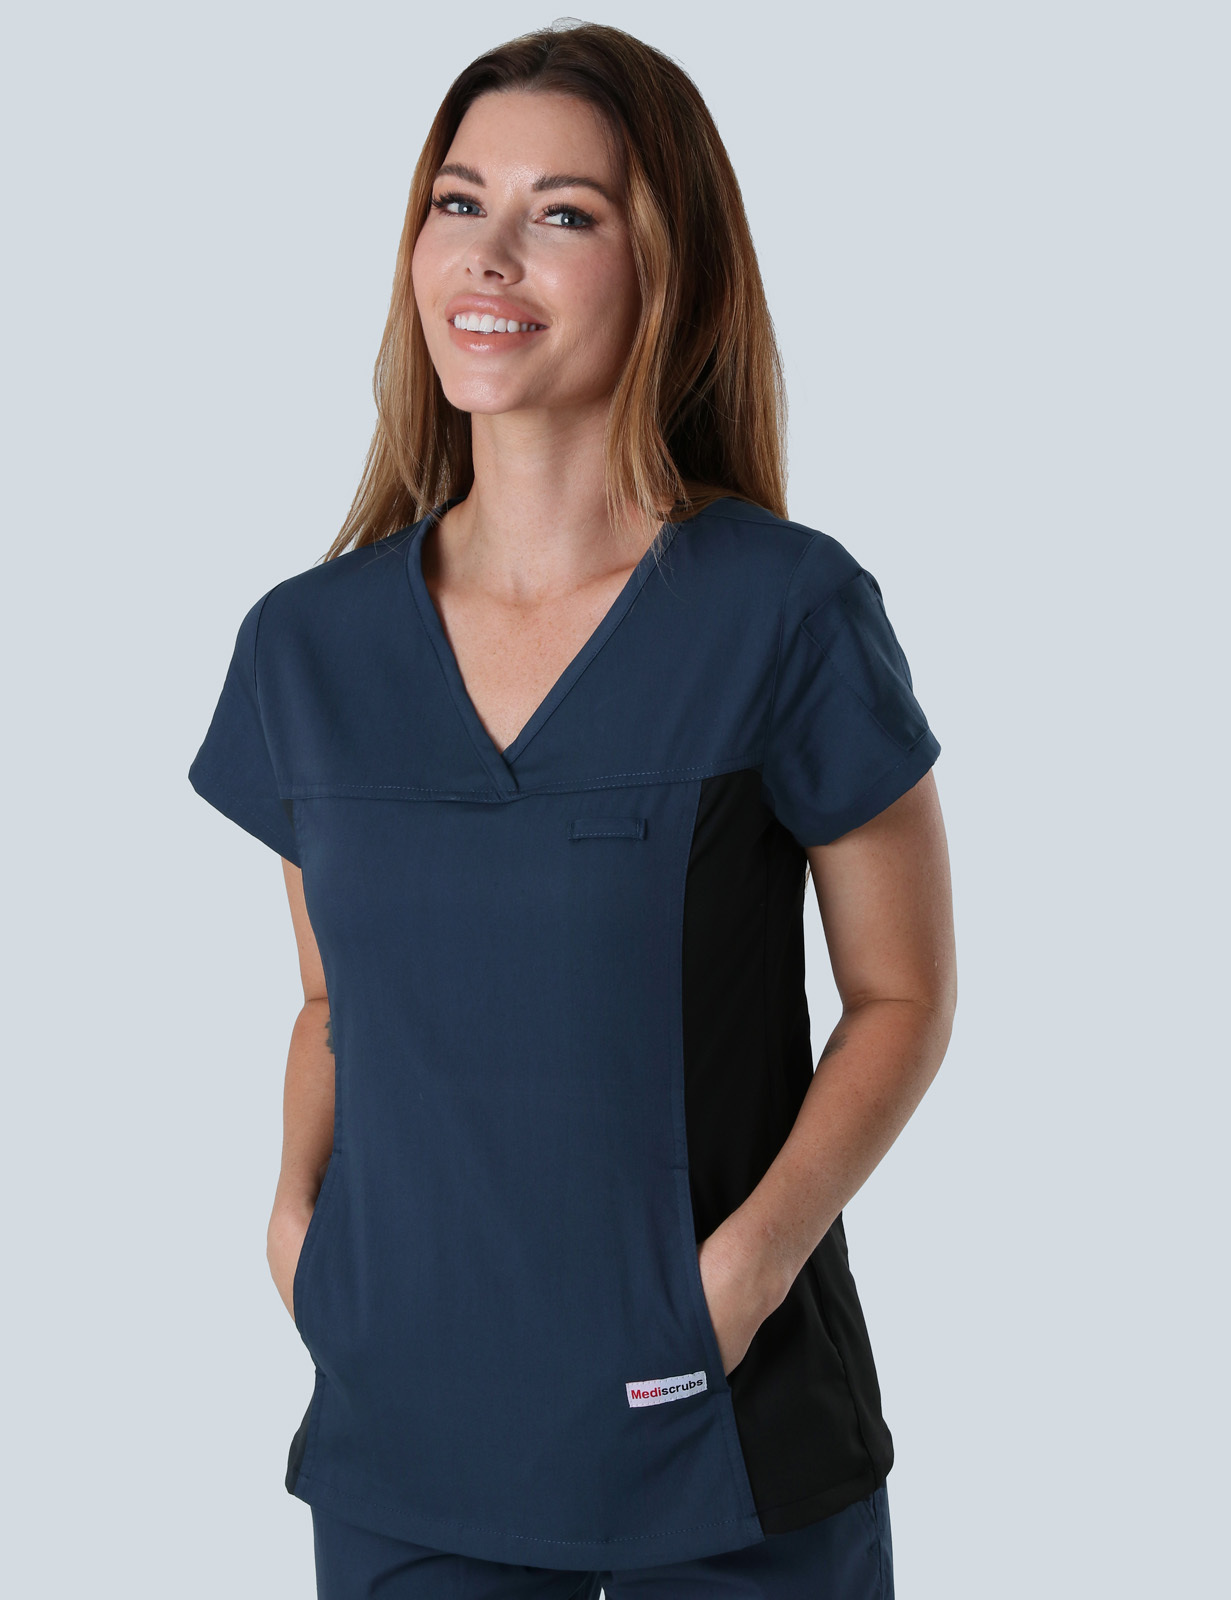 Monash Health - ER Nurse (Women's Fit Spandex Scrub Top and Cargo Pants in Navy incl Logos)